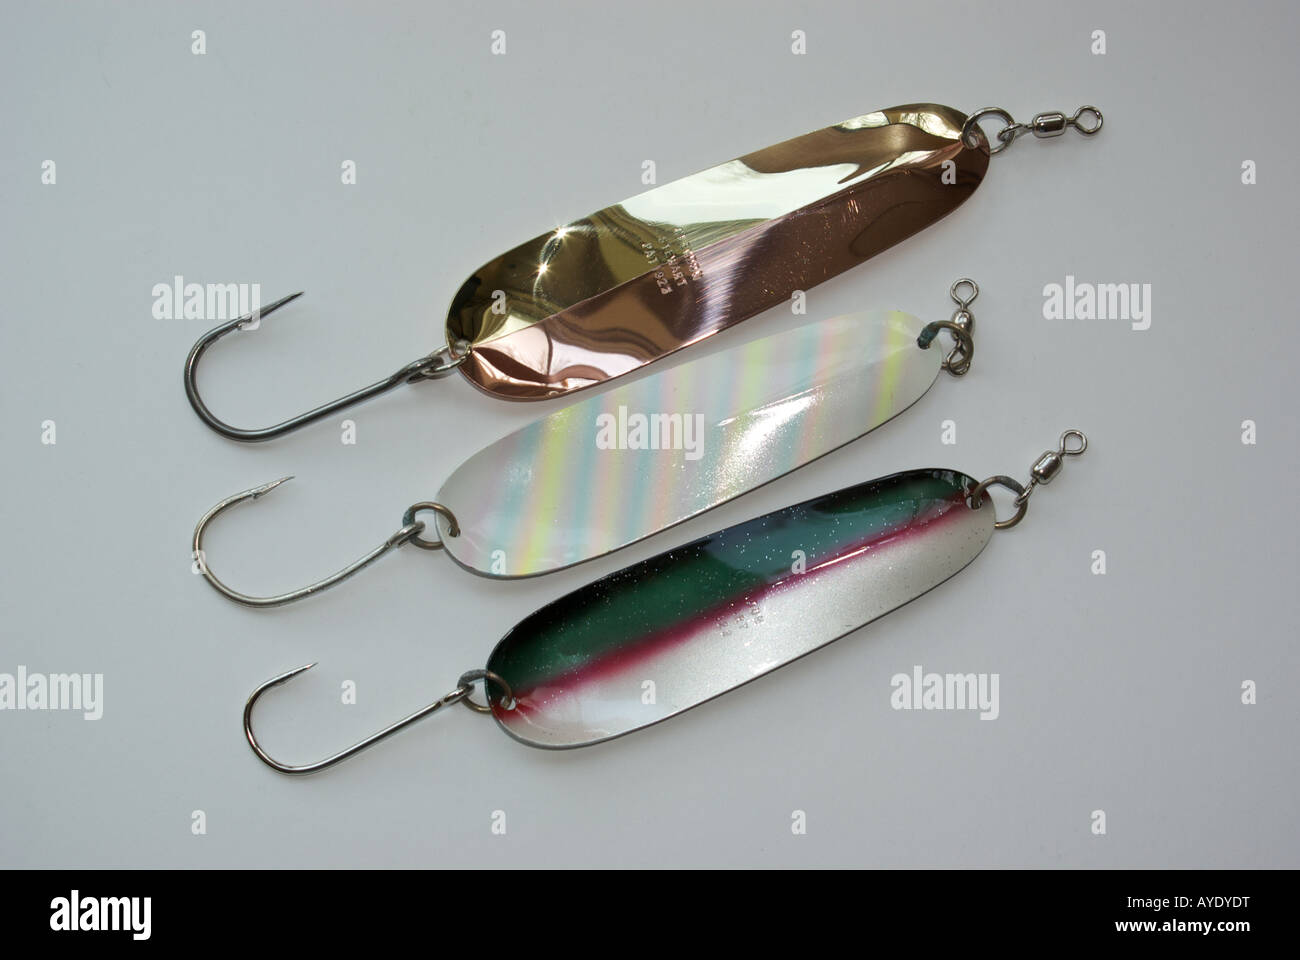 https://c8.alamy.com/comp/AYDYDT/gibbs-clendon-stewart-large-trolling-spoons-for-salmon-and-bottom-AYDYDT.jpg